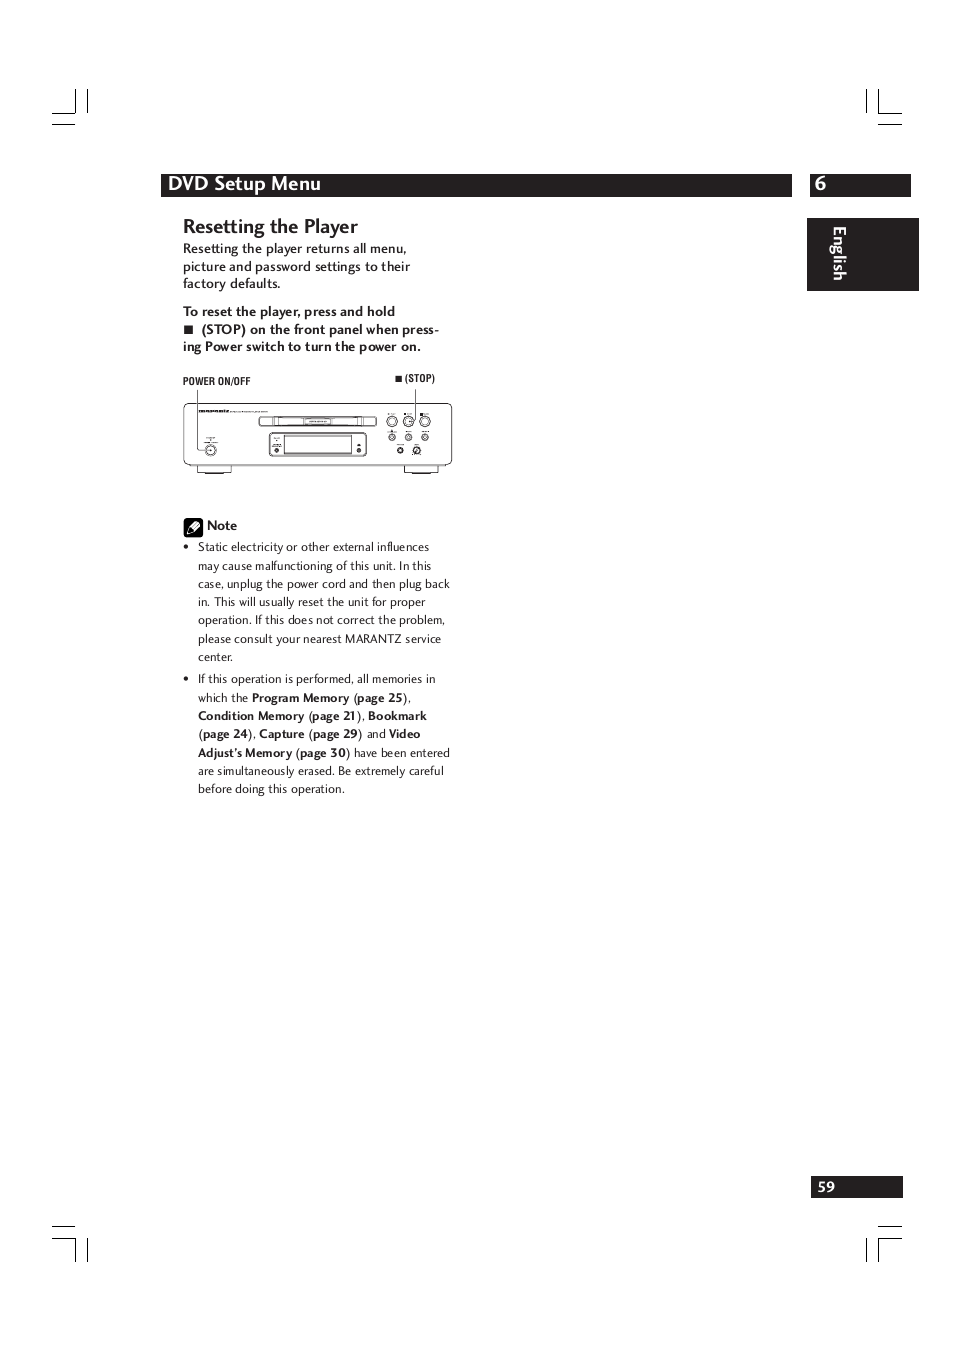 6dvd setup menu, Resetting the player | Marantz DV9600 User Manual | Page 59 / 68